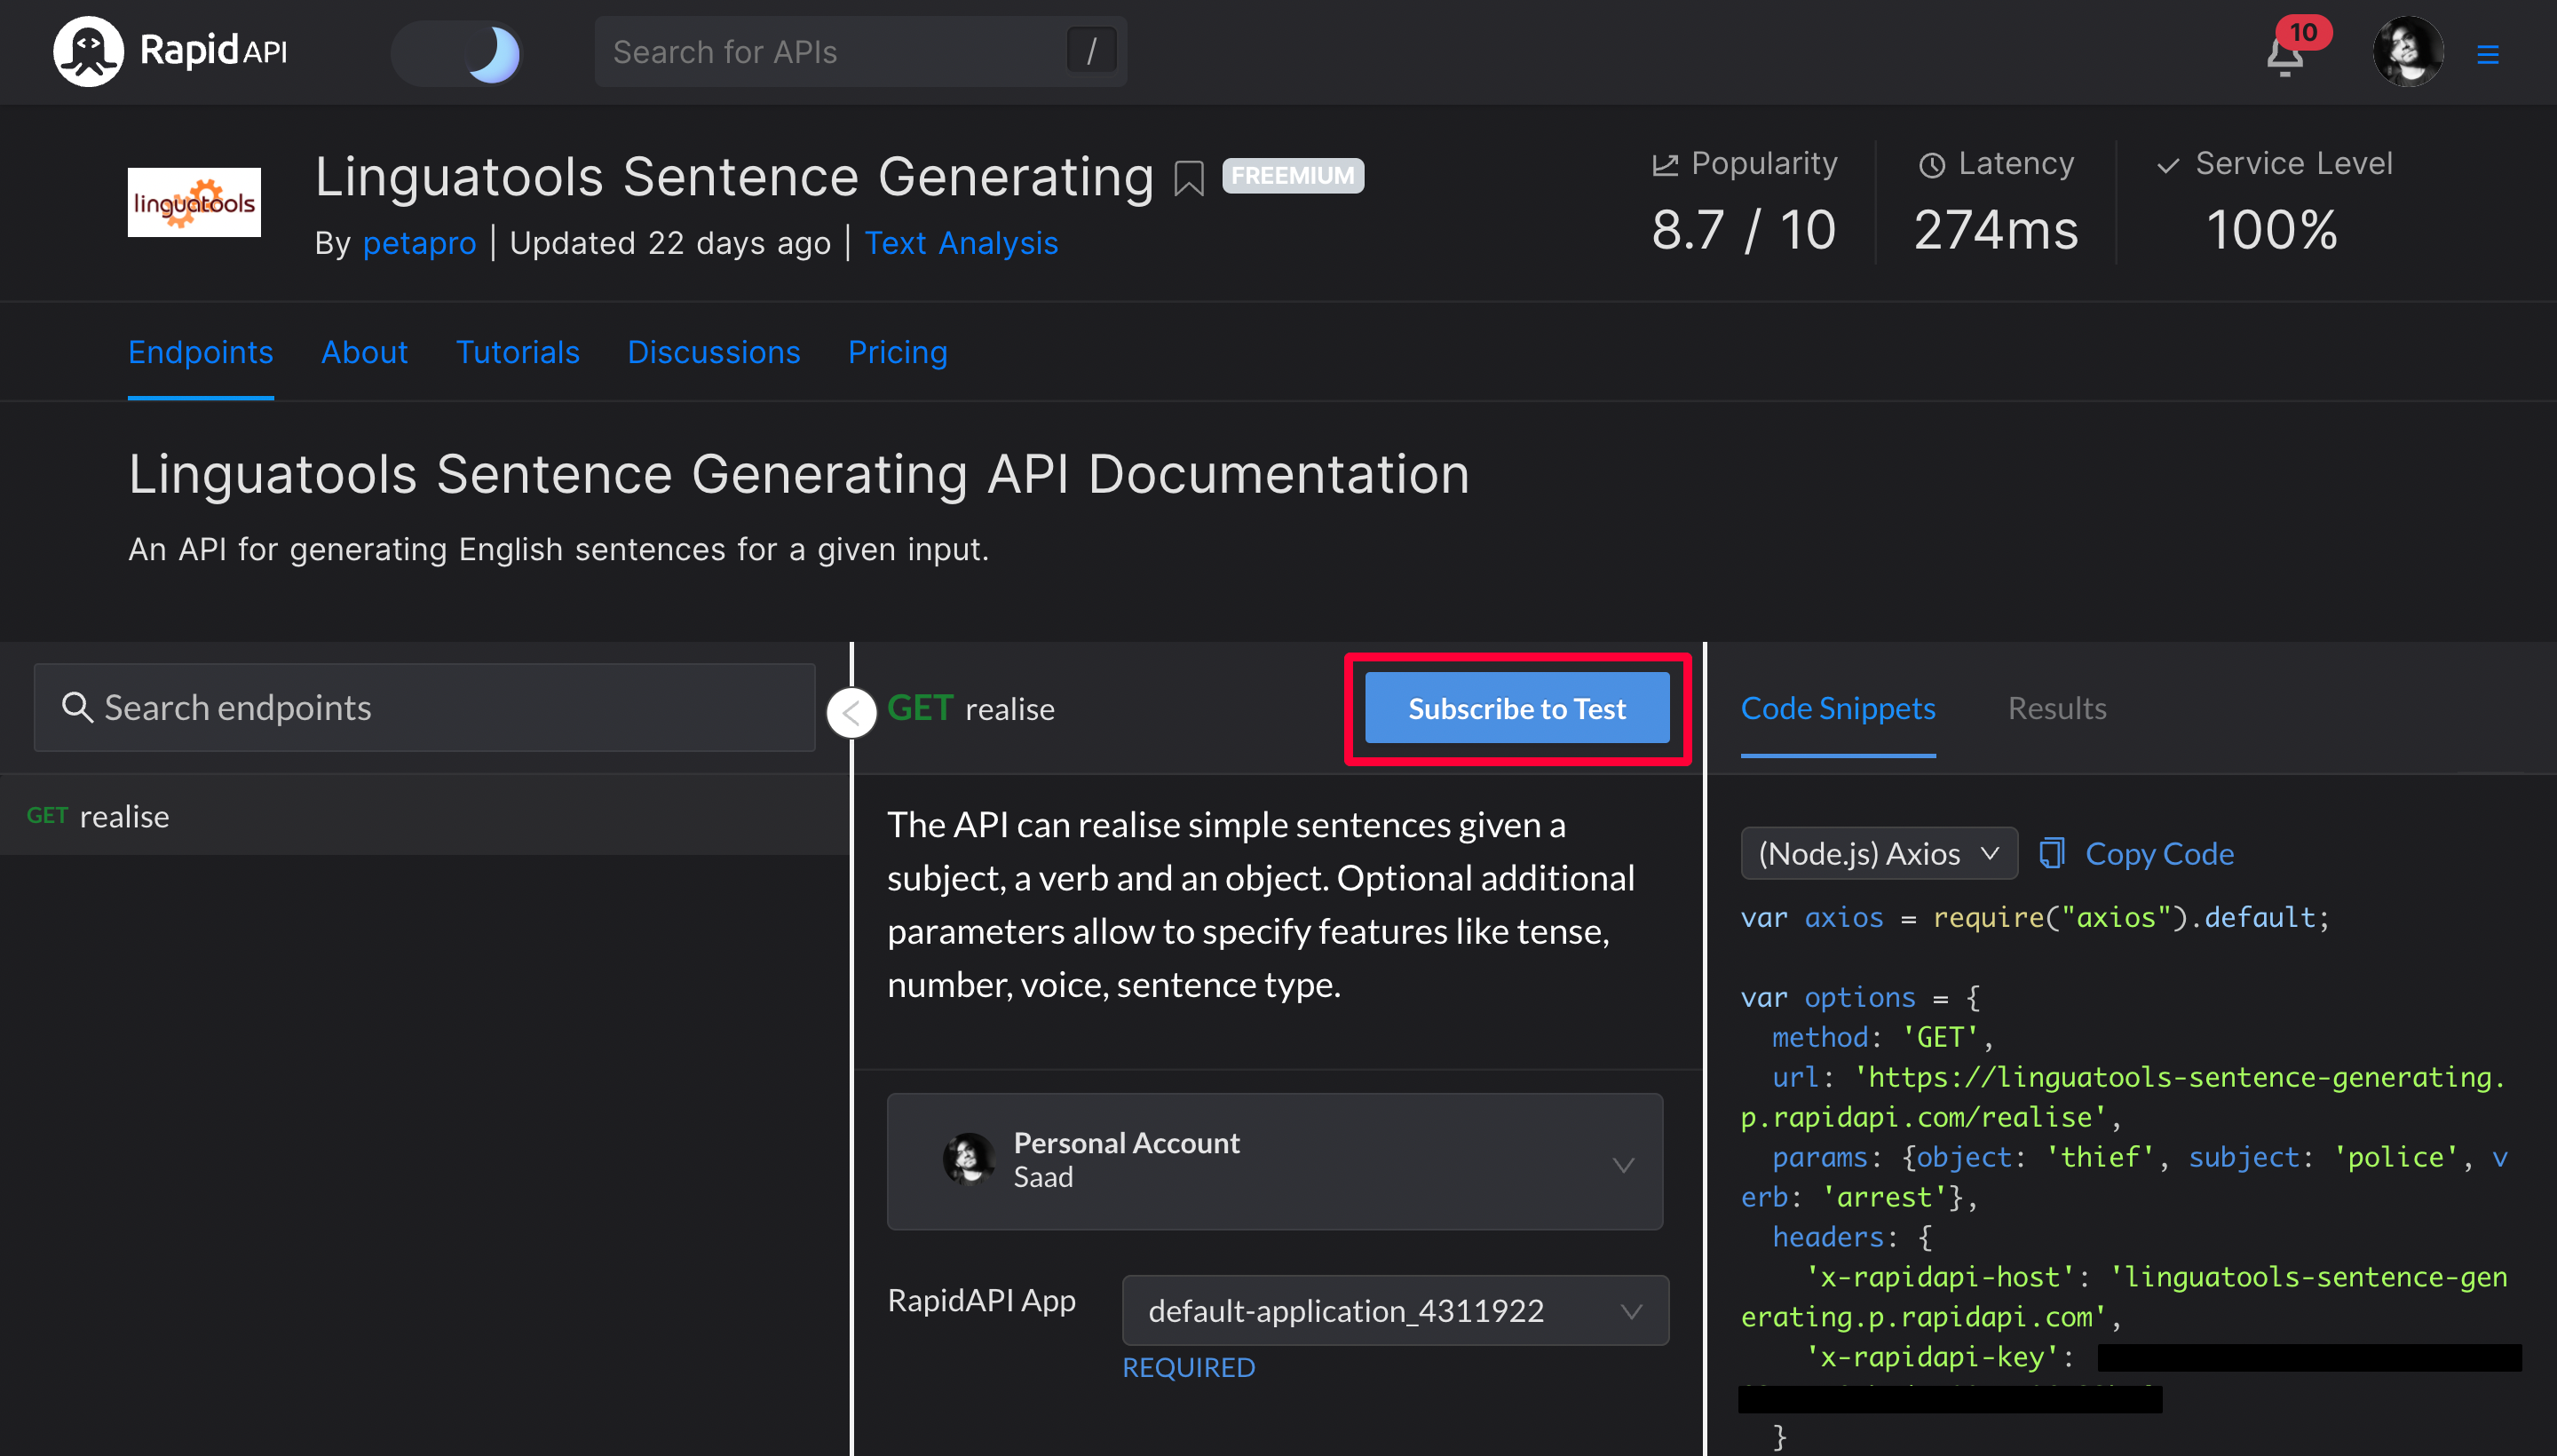 Subscribe to Linguatools Sentence Generating API